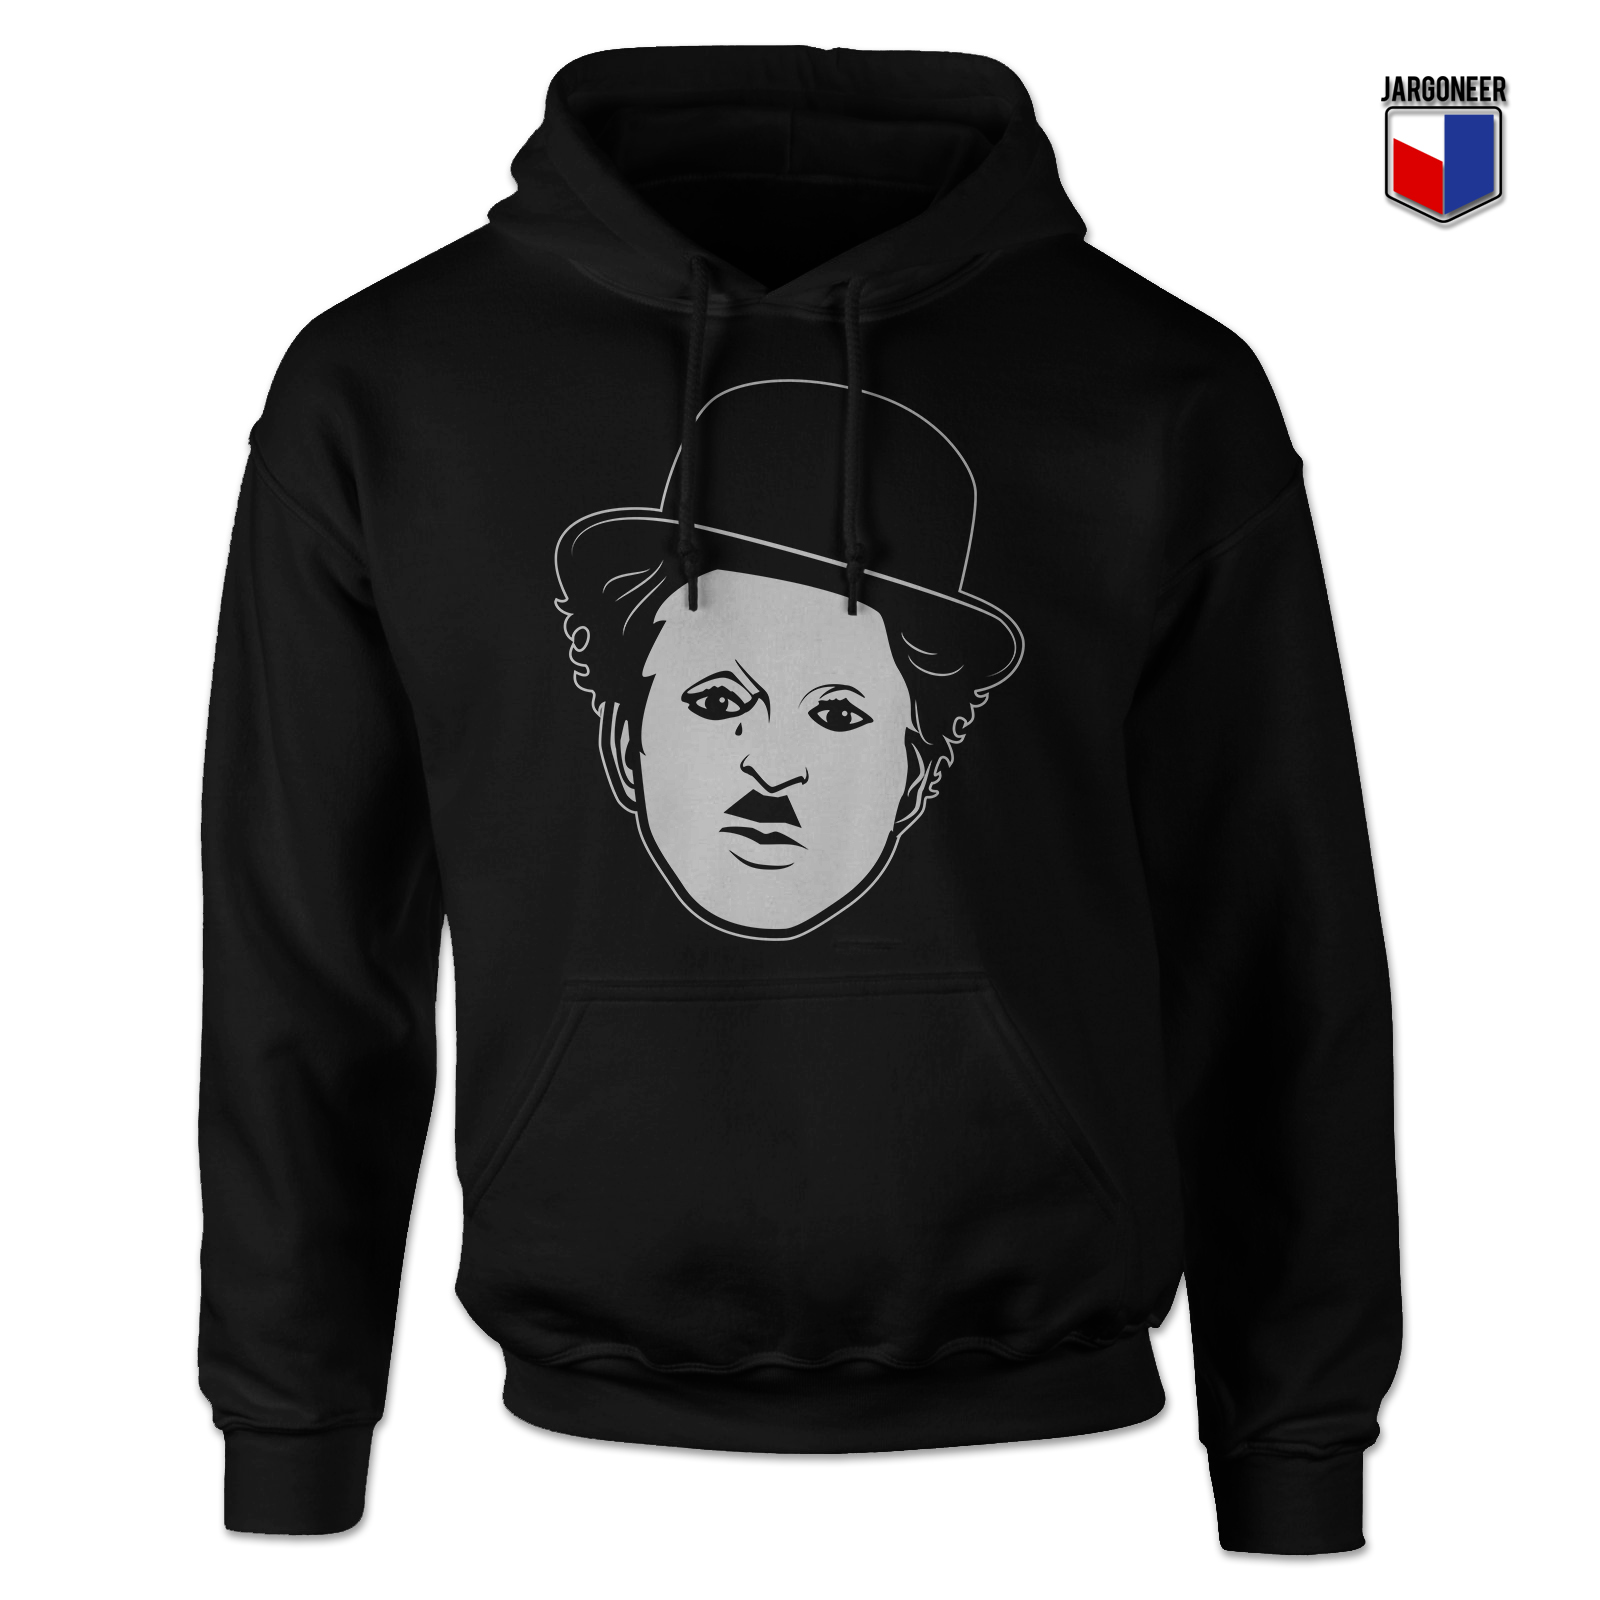 Charlie Chaplin Black Hoody - Shop Unique Graphic Cool Shirt Designs